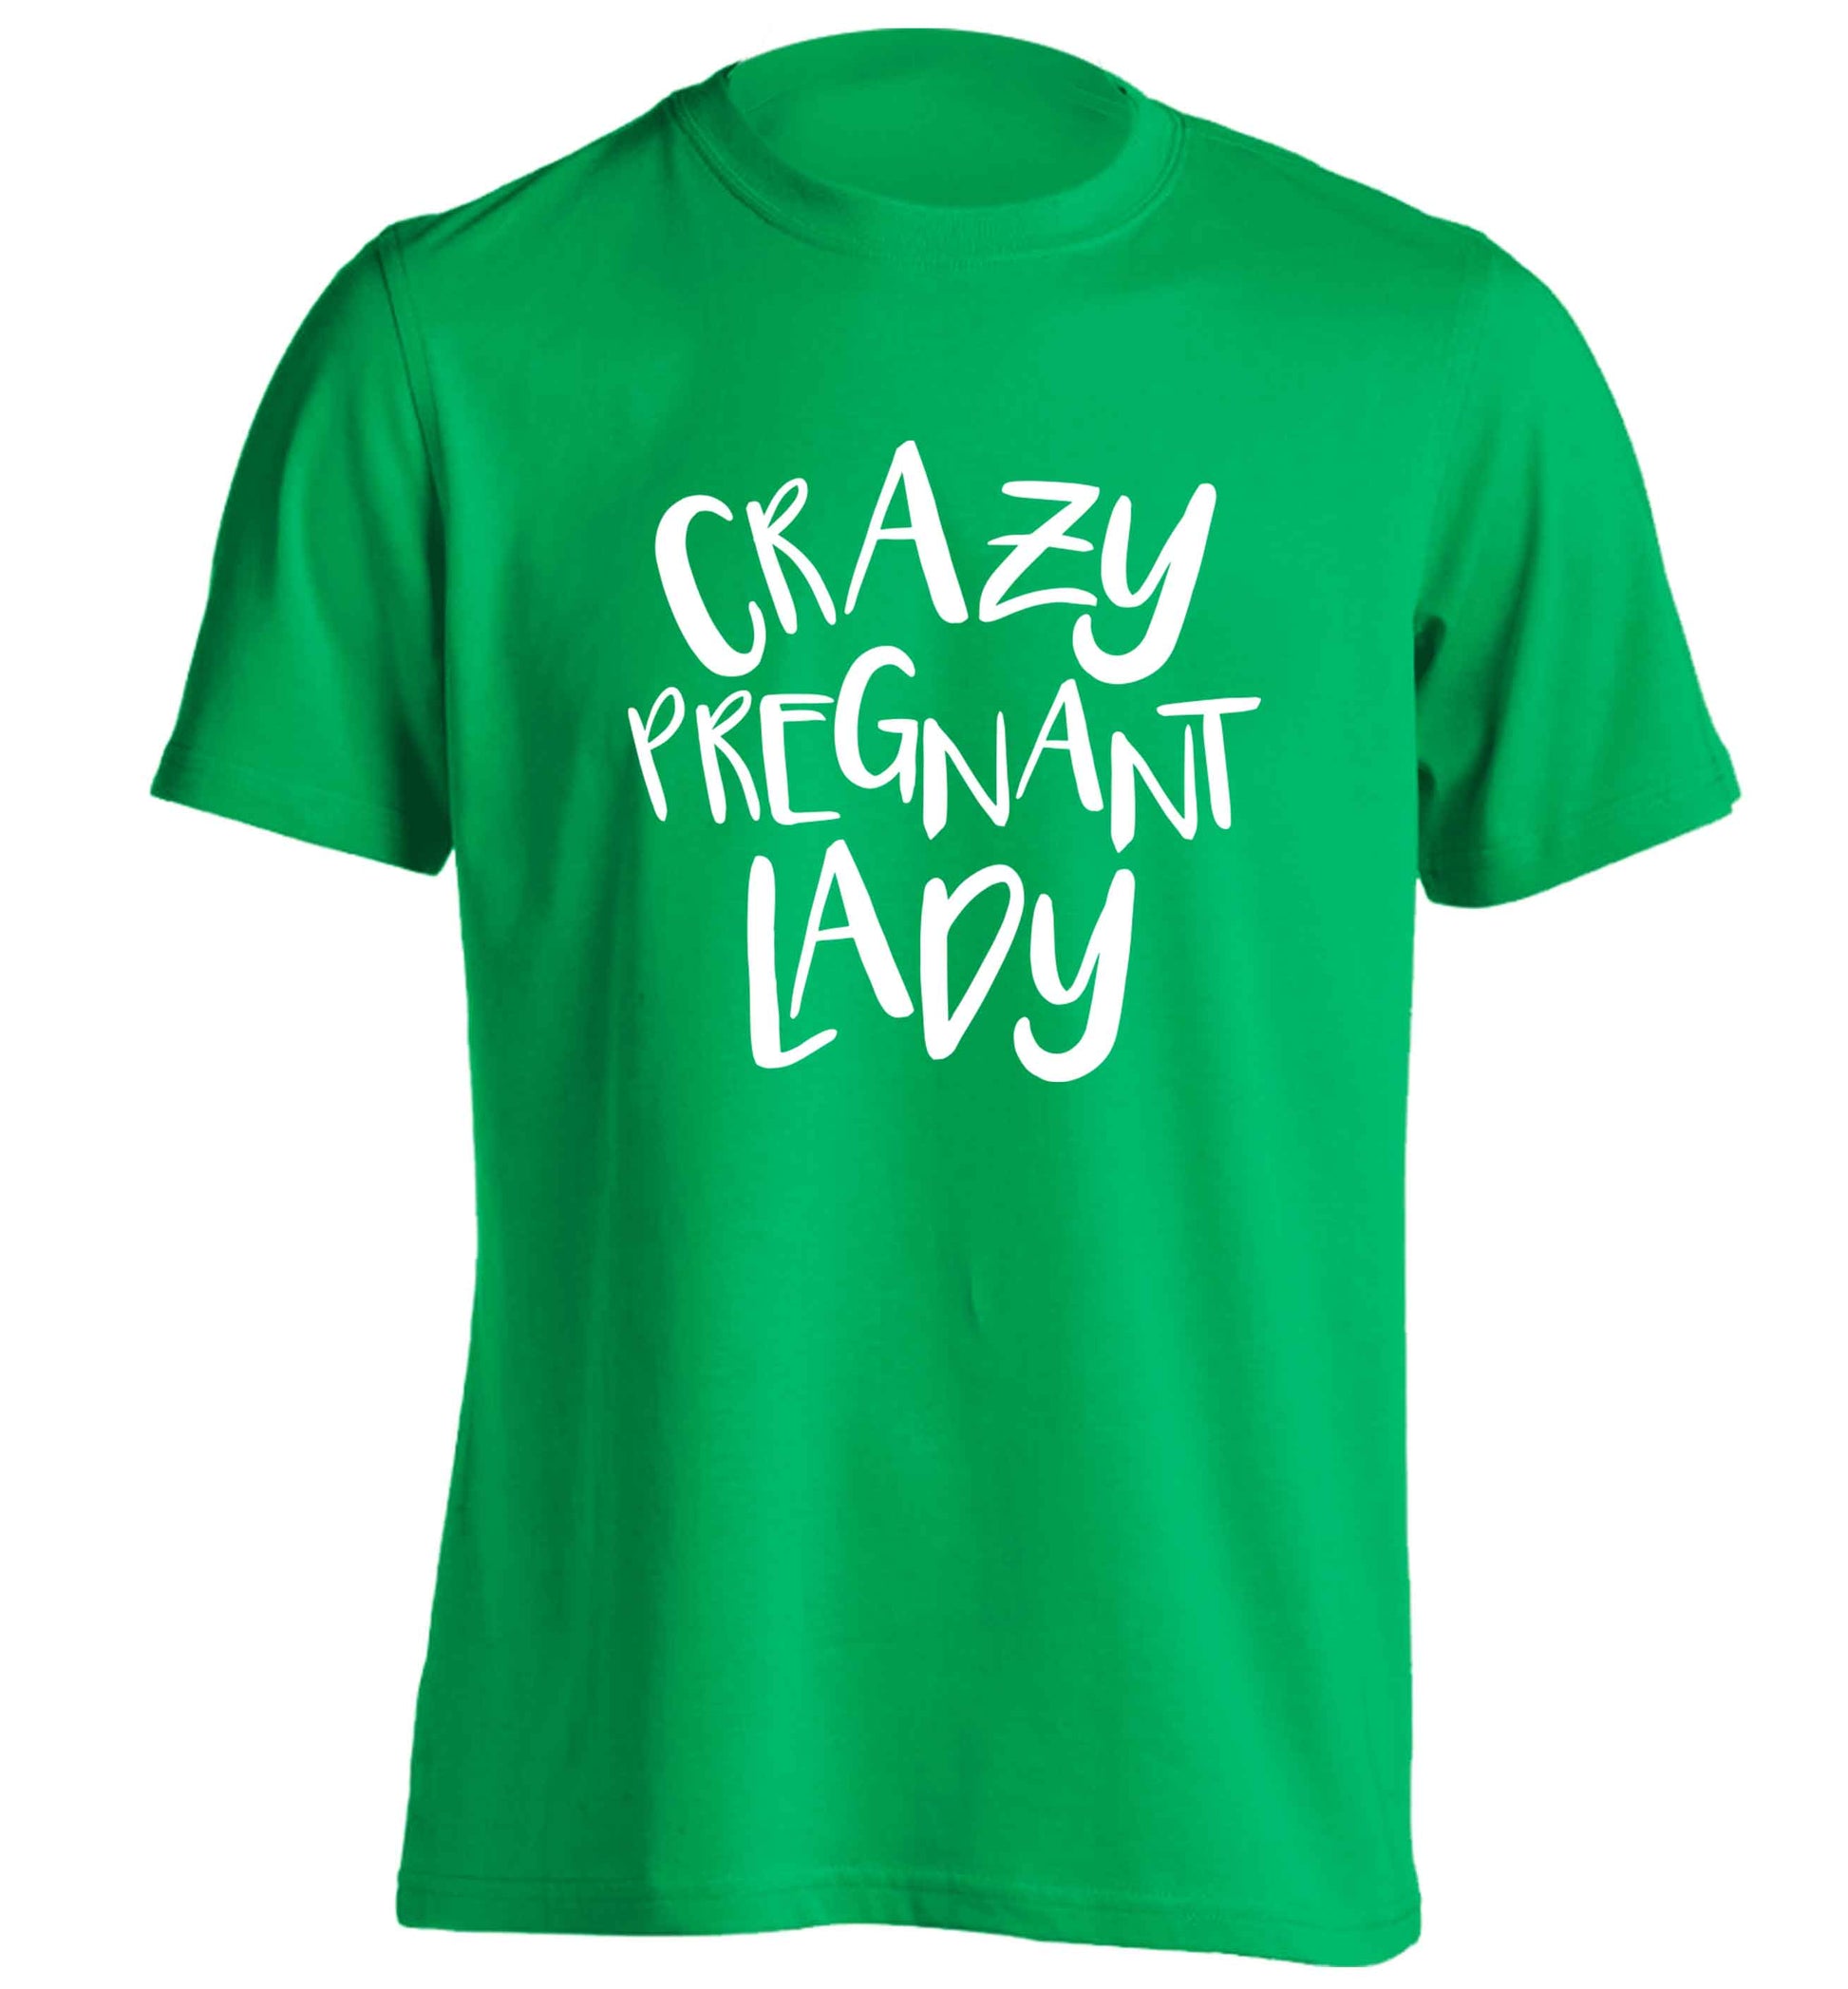 Crazy pregnant lady adults unisex green Tshirt 2XL